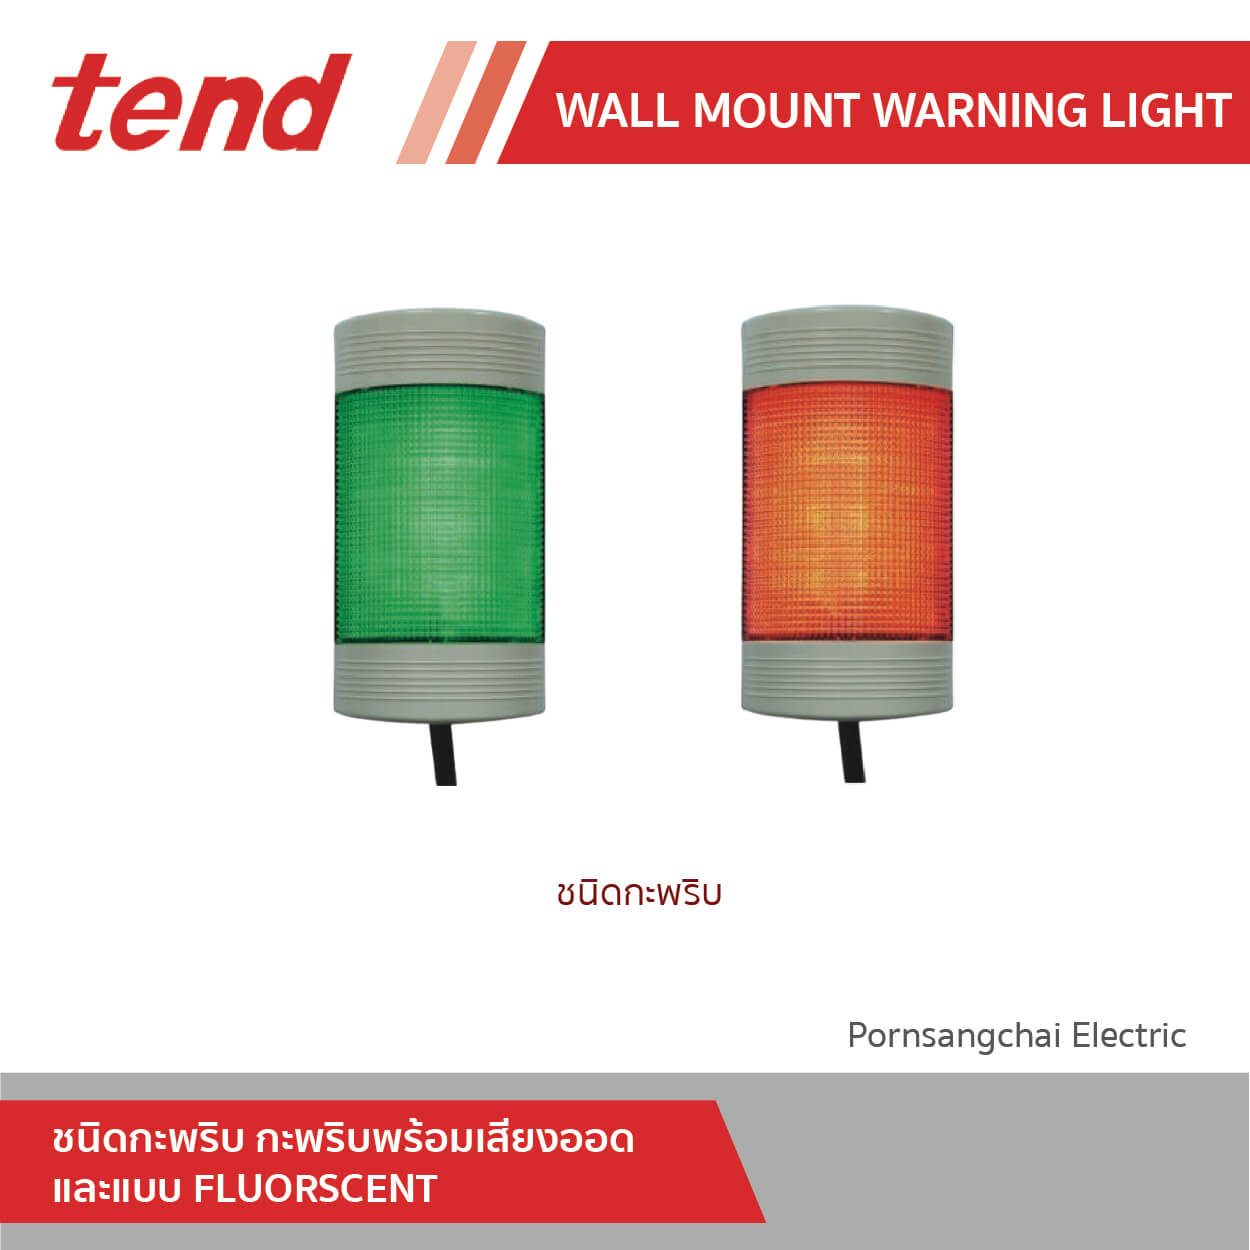 tend Wall Mount Warning Light